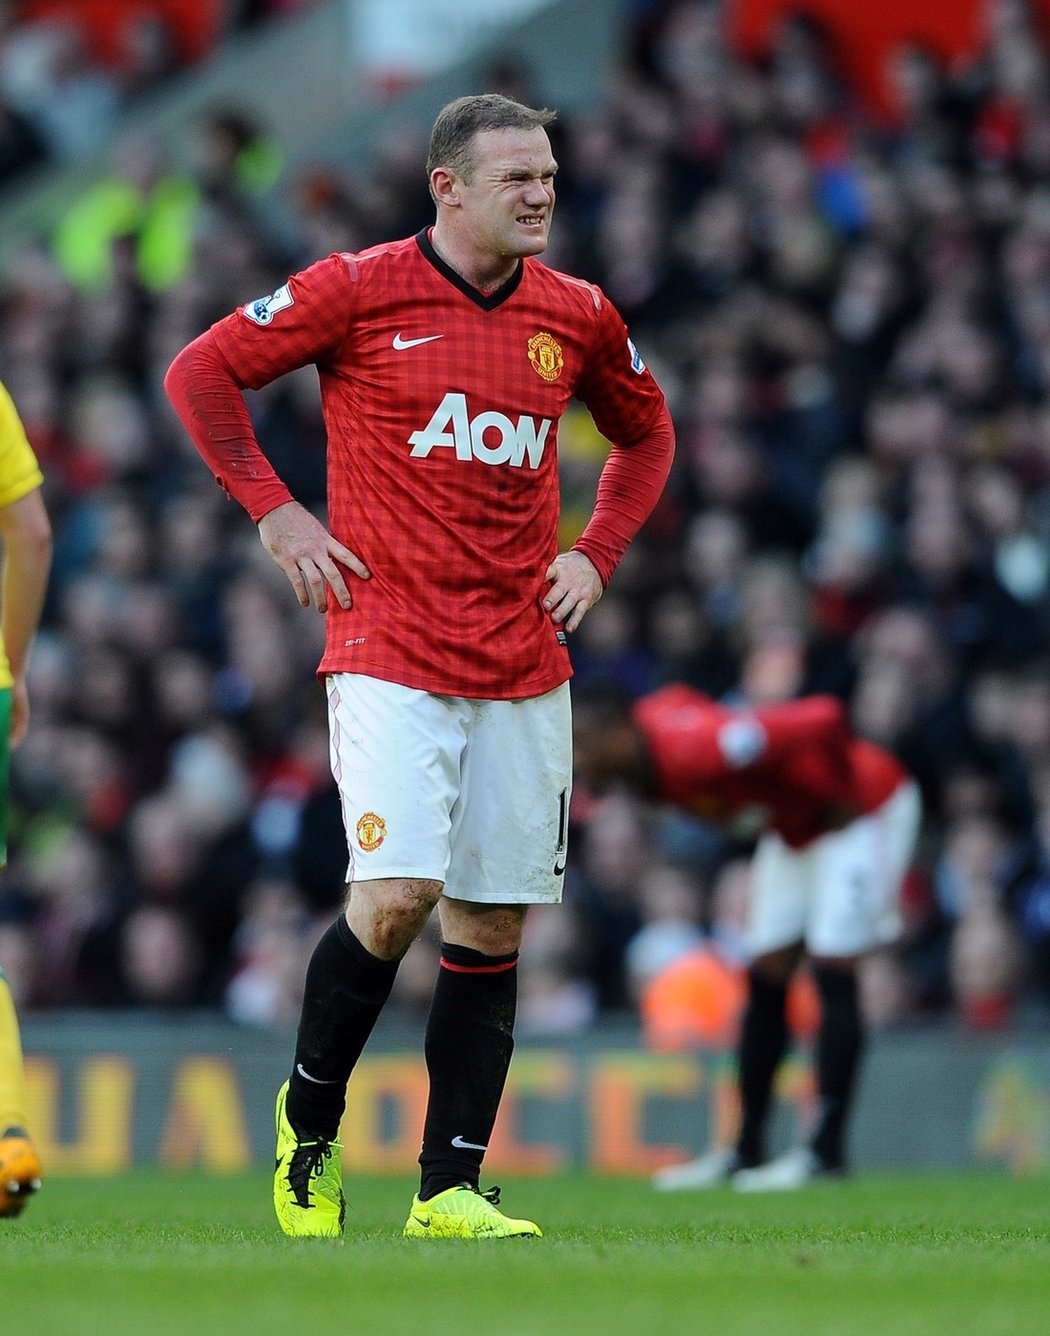 2. Wayne Rooney (Manchester United)